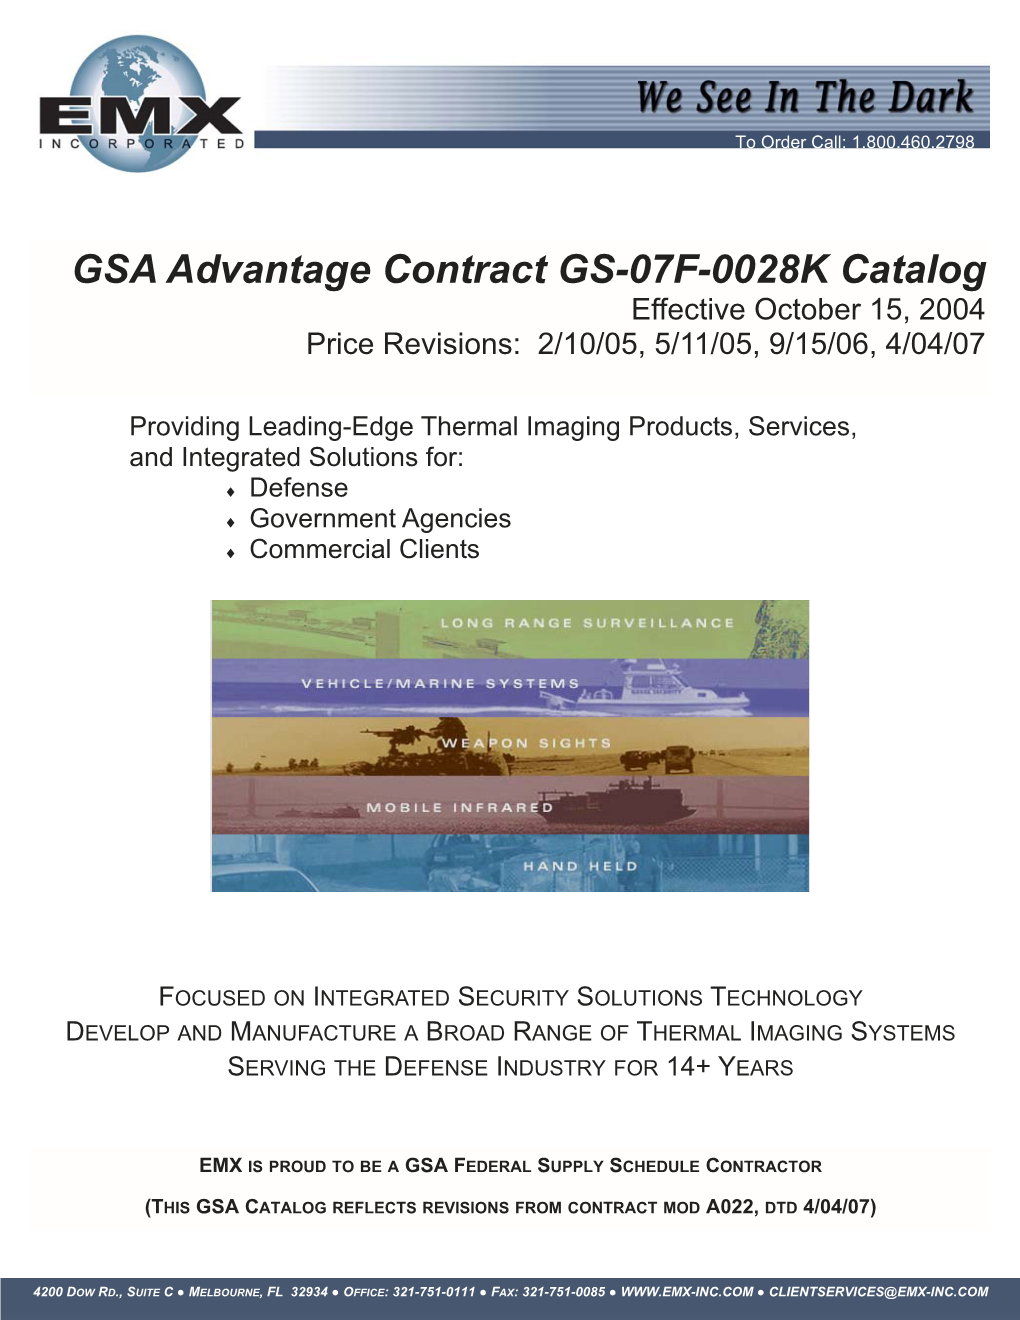 GSA Advantage Contract GS-07F-0028K Catalog Effective October 15, 2004 Price Revisions: 2/10/05, 5/11/05, 9/15/06, 4/04/07